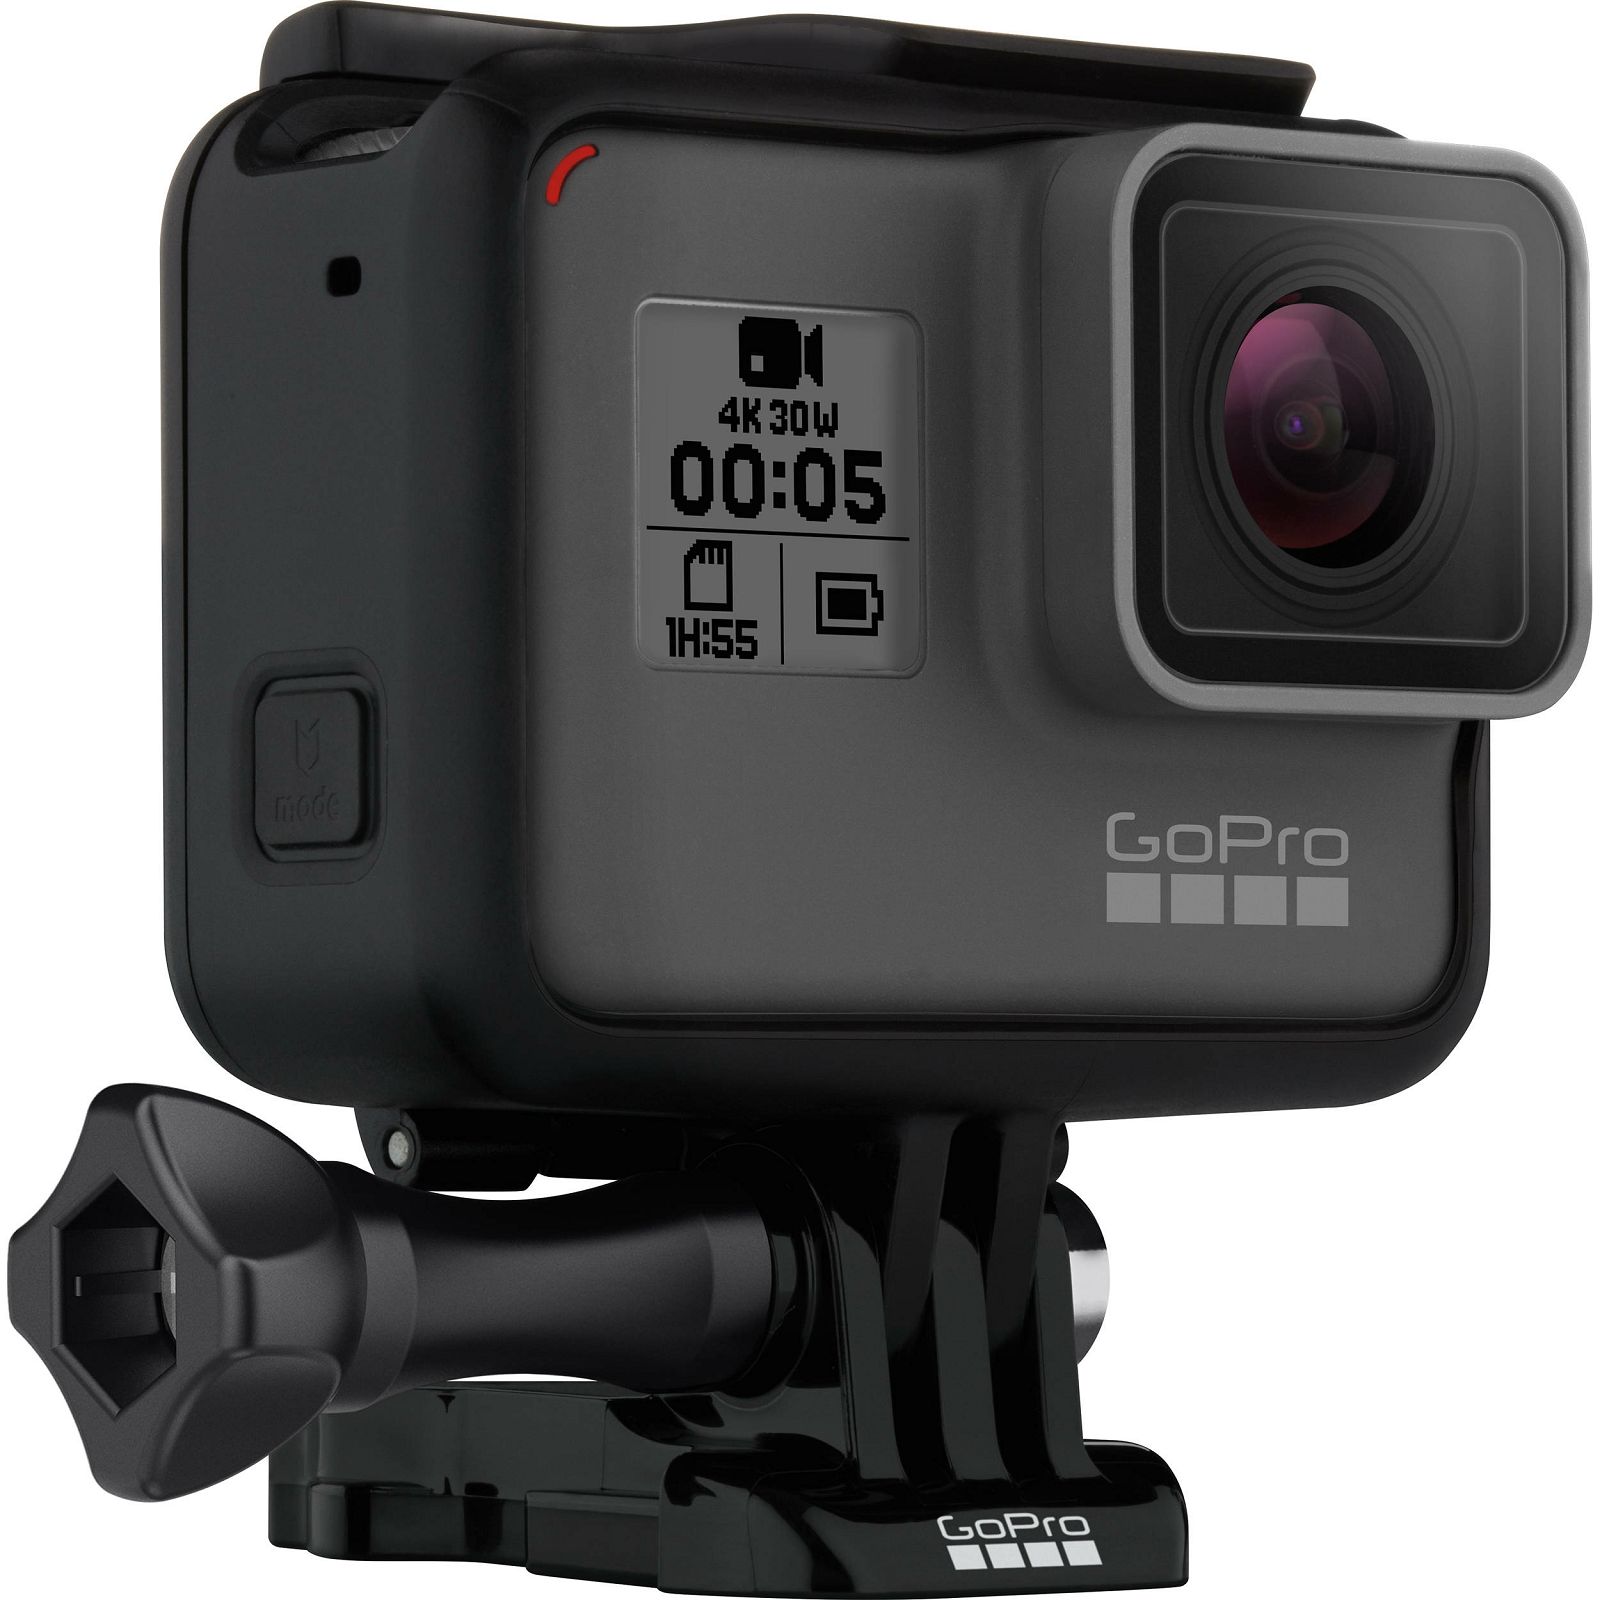 GoPro HERO5 Black Edition 4K 120p 12Mpx WiFi GPS Sportska akcijska digitalna kamera CHDHX-501-EU